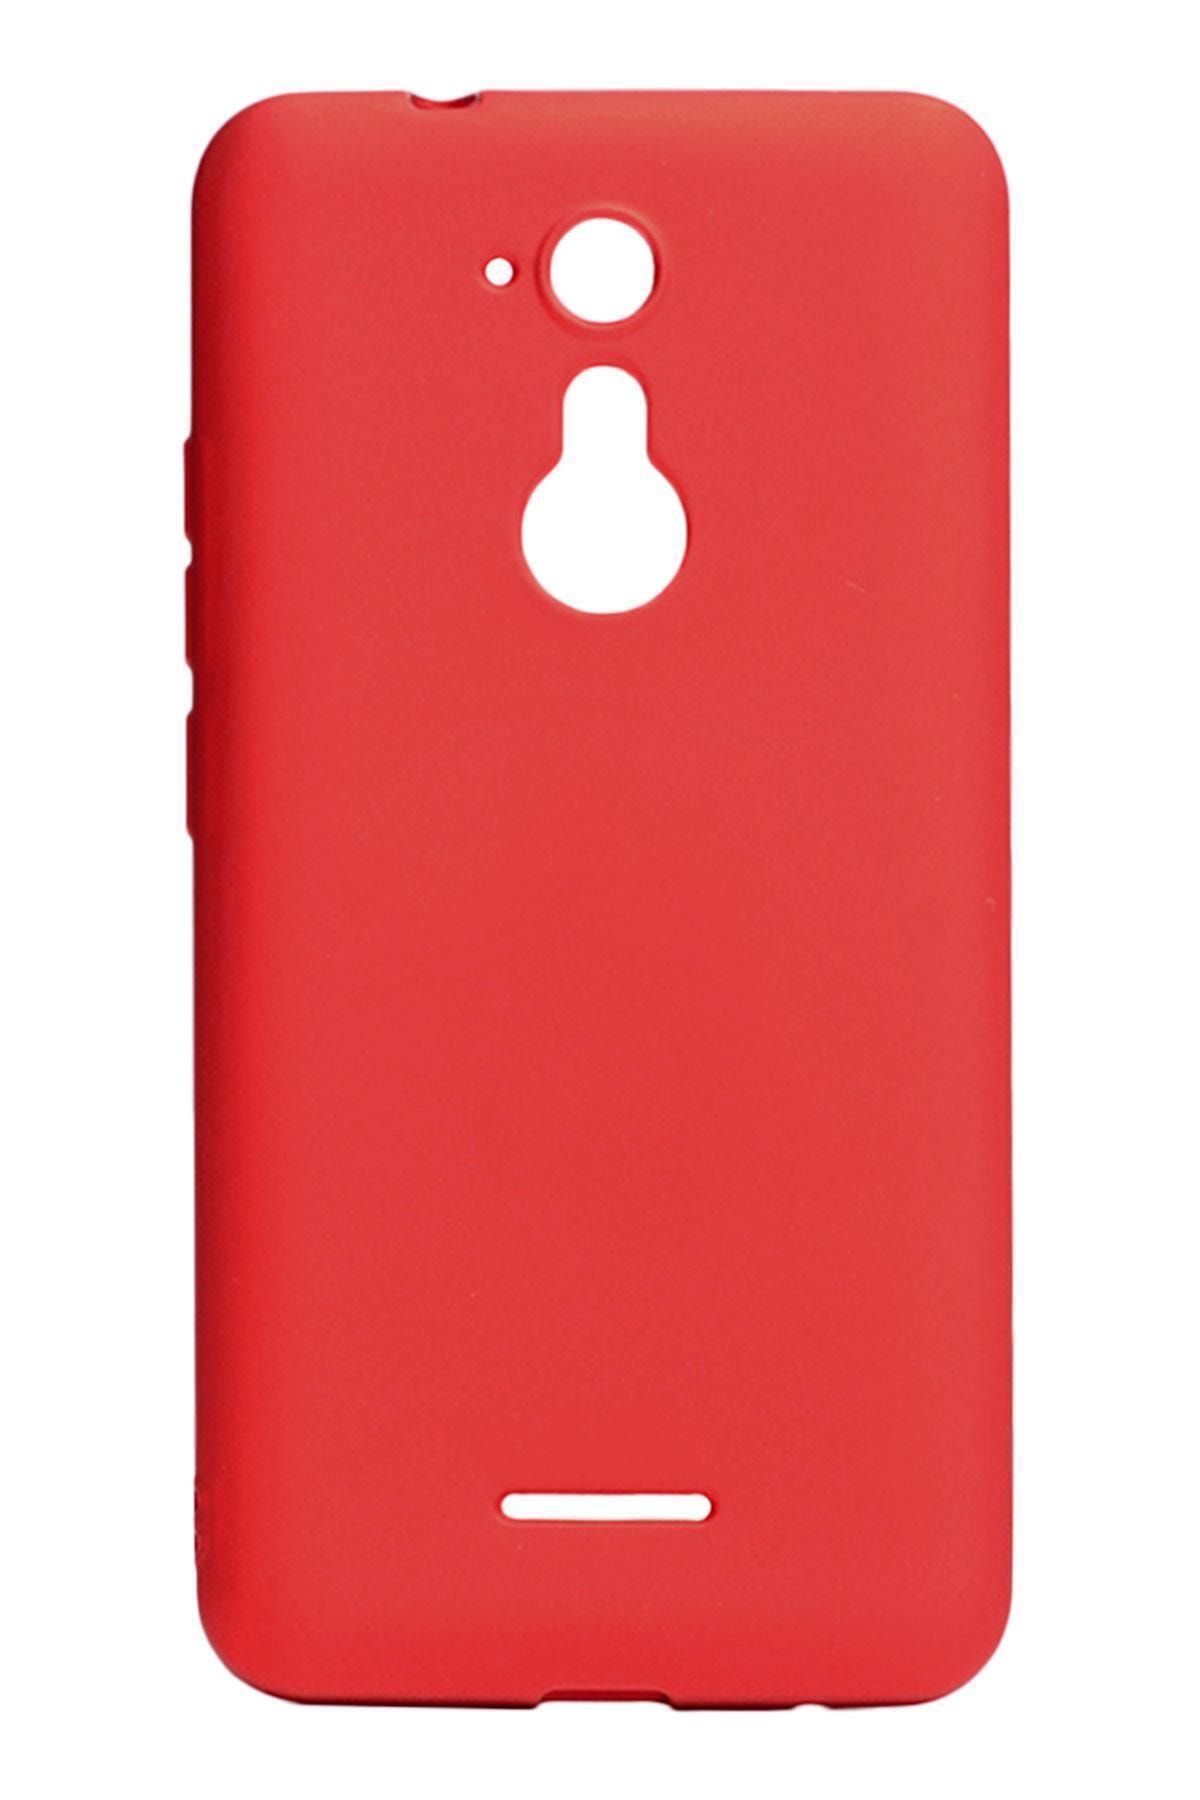 Casper Via M3 Kılıf Premier Renkli Esnek Silikon Kırmızı